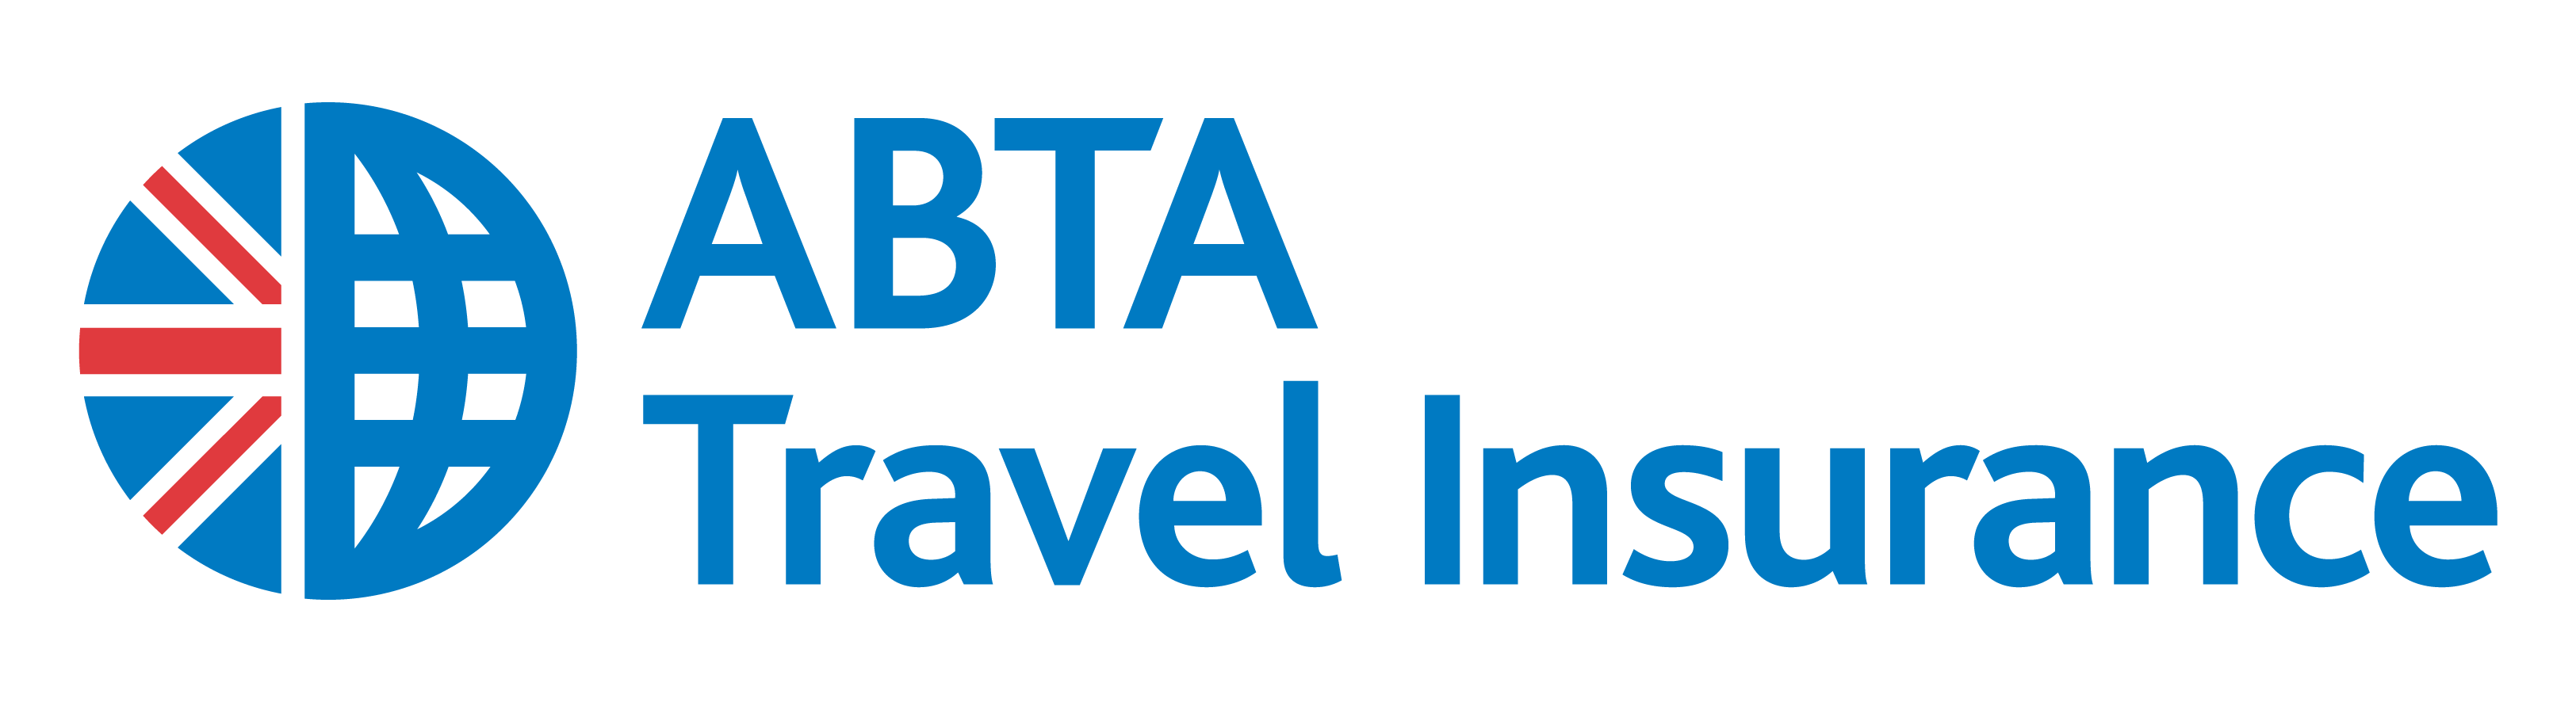 global travel group abta